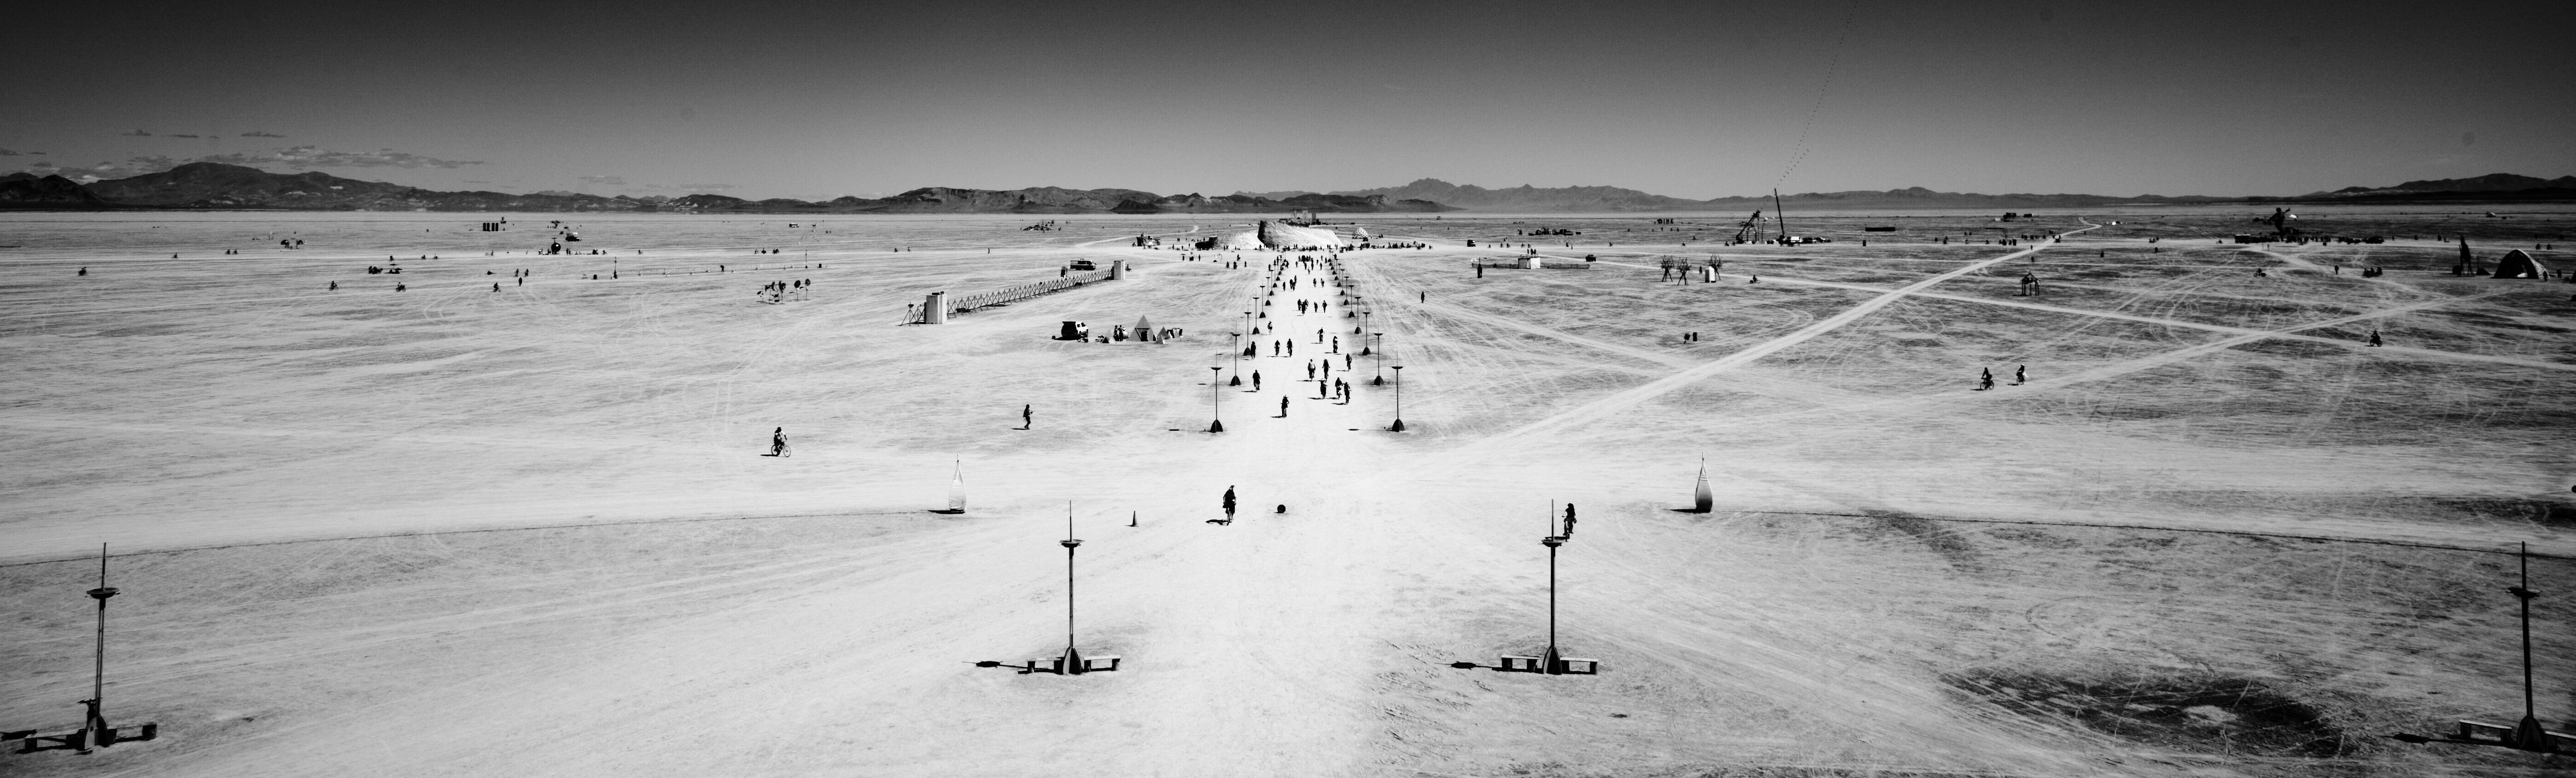 Tao Ruspoli Black and White Photograph – Vanishing Point; Caprarola und Black Rock City (Burning Man)